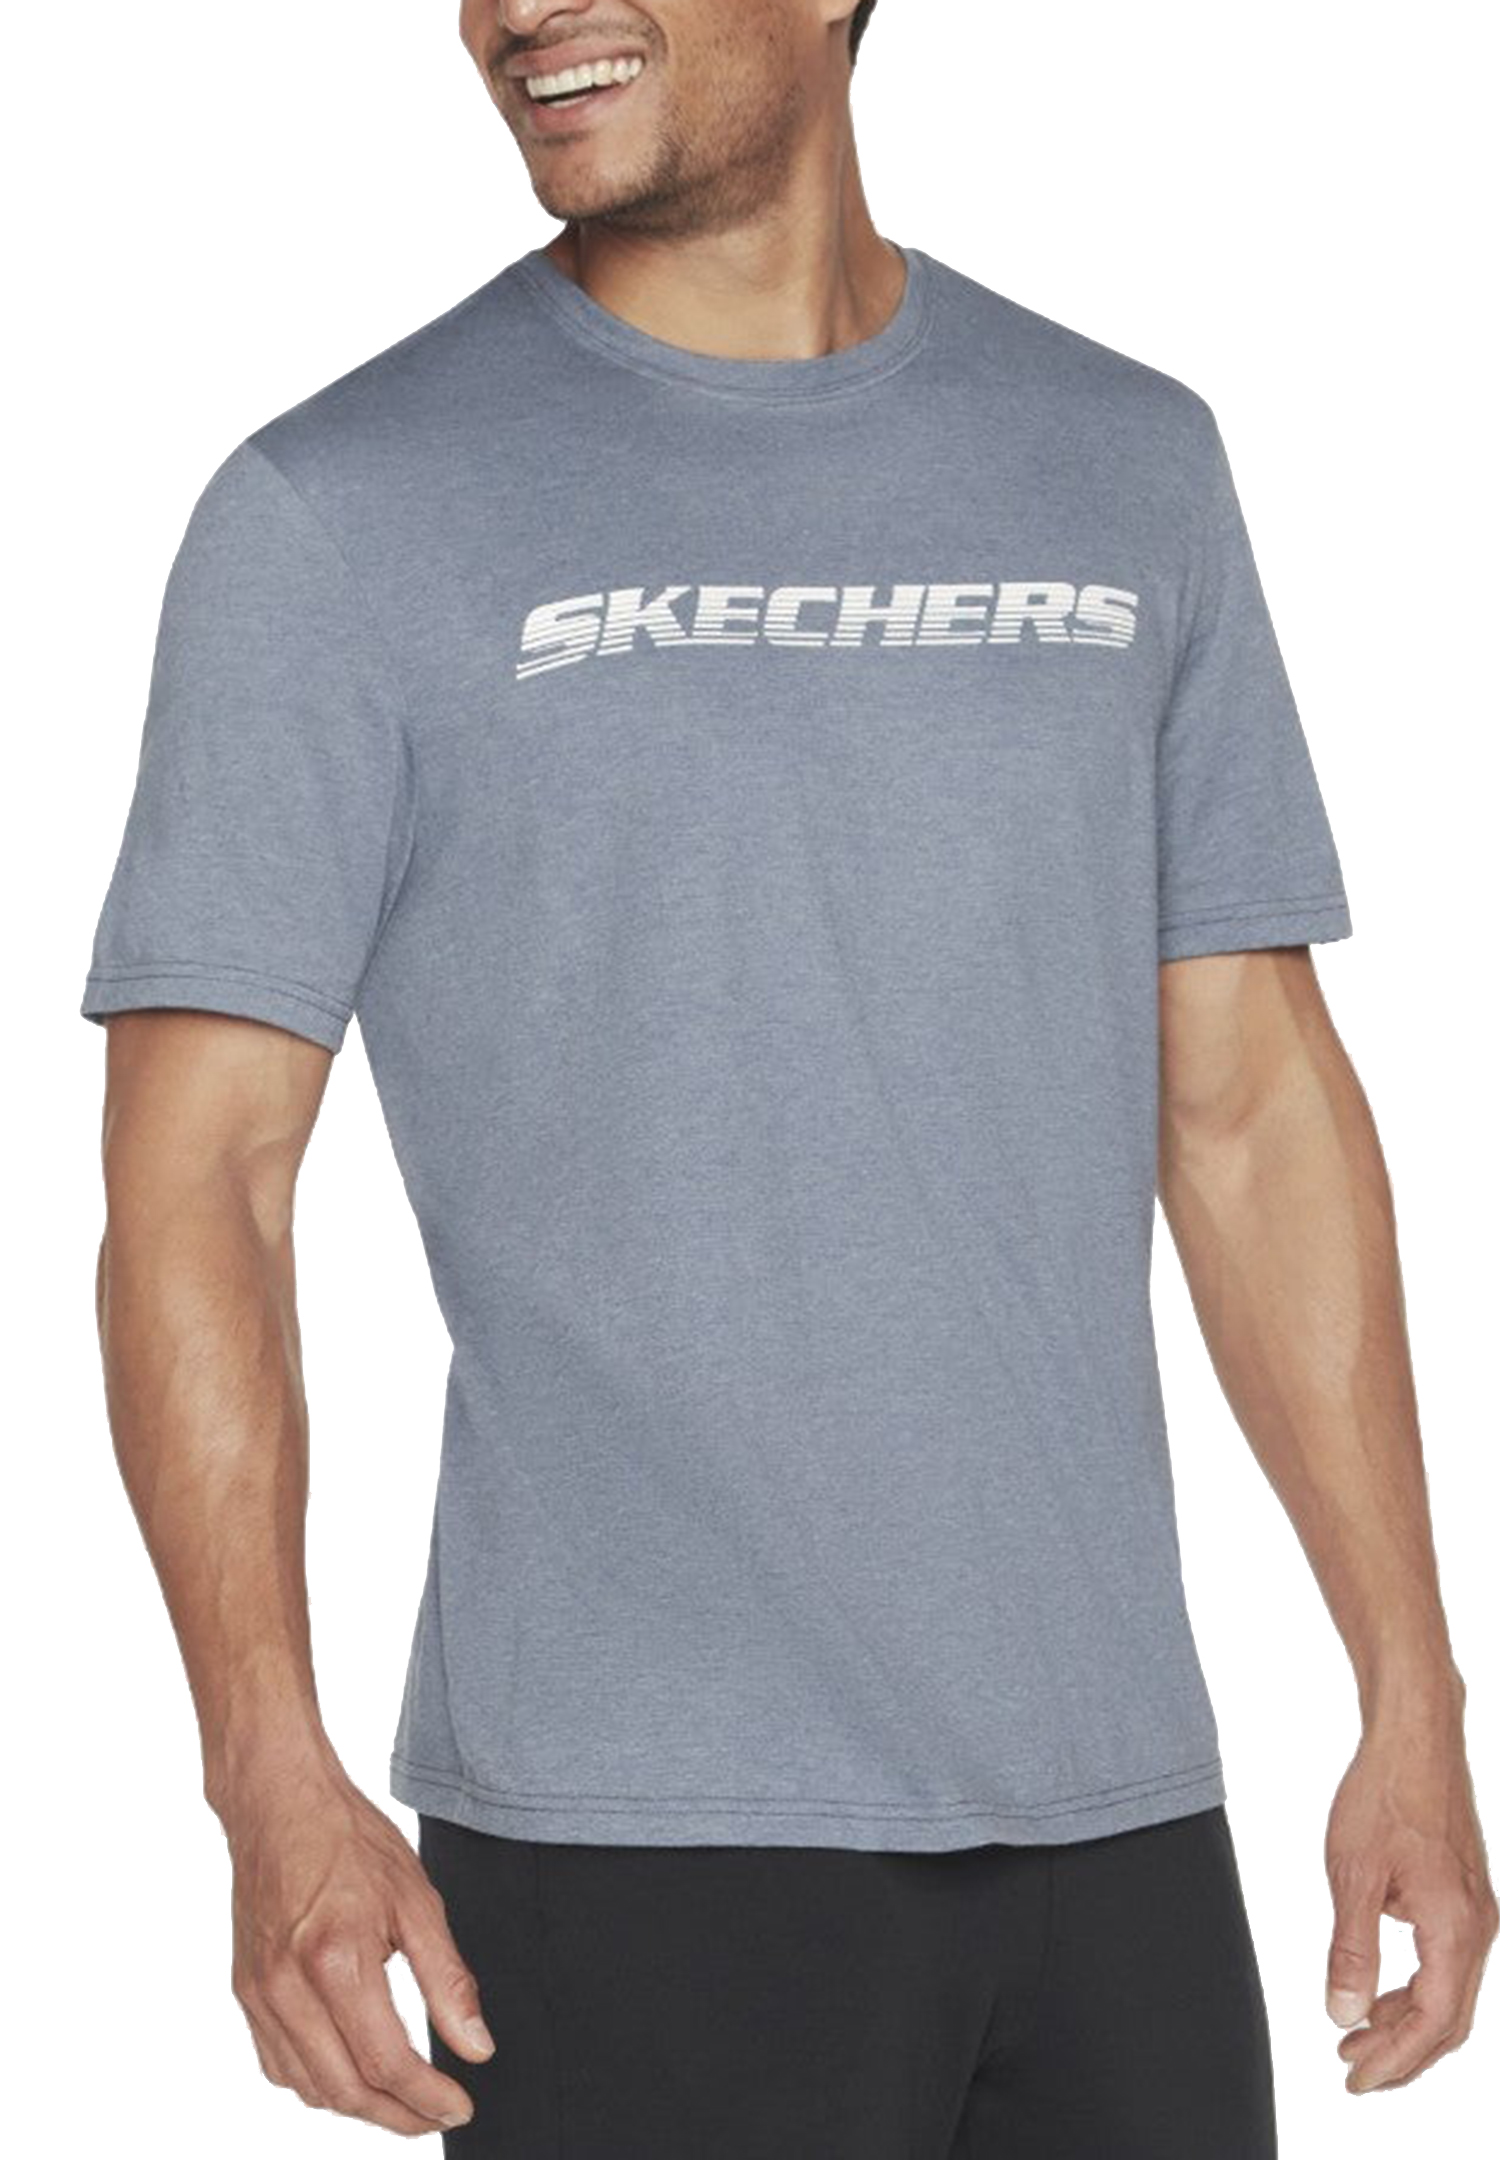 Skechers MEN'S MOTION TEE Shirt Herren T-Shirt MTS367 113 BLGY blau